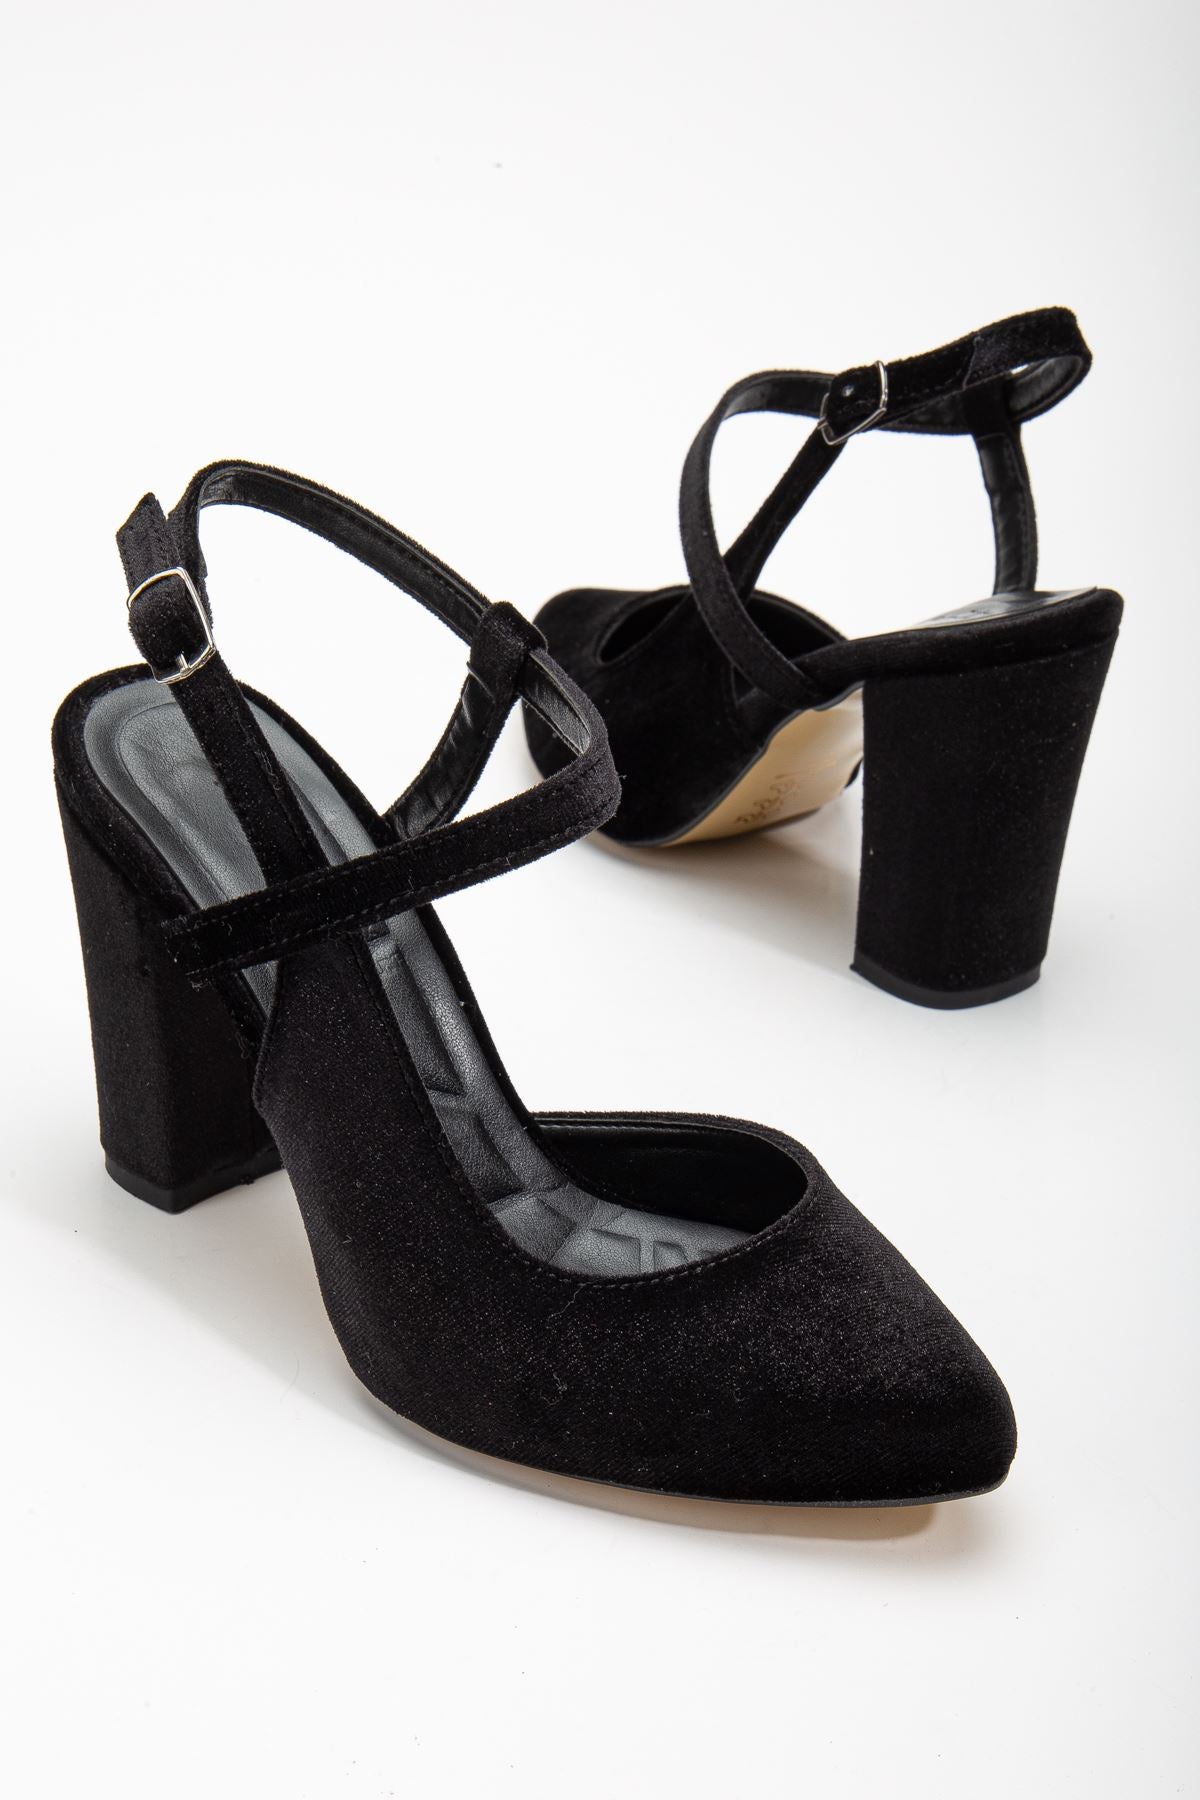 Lotus Black Velvet Ankle-Strap Heeled Women's Shoes - STREETMODE™